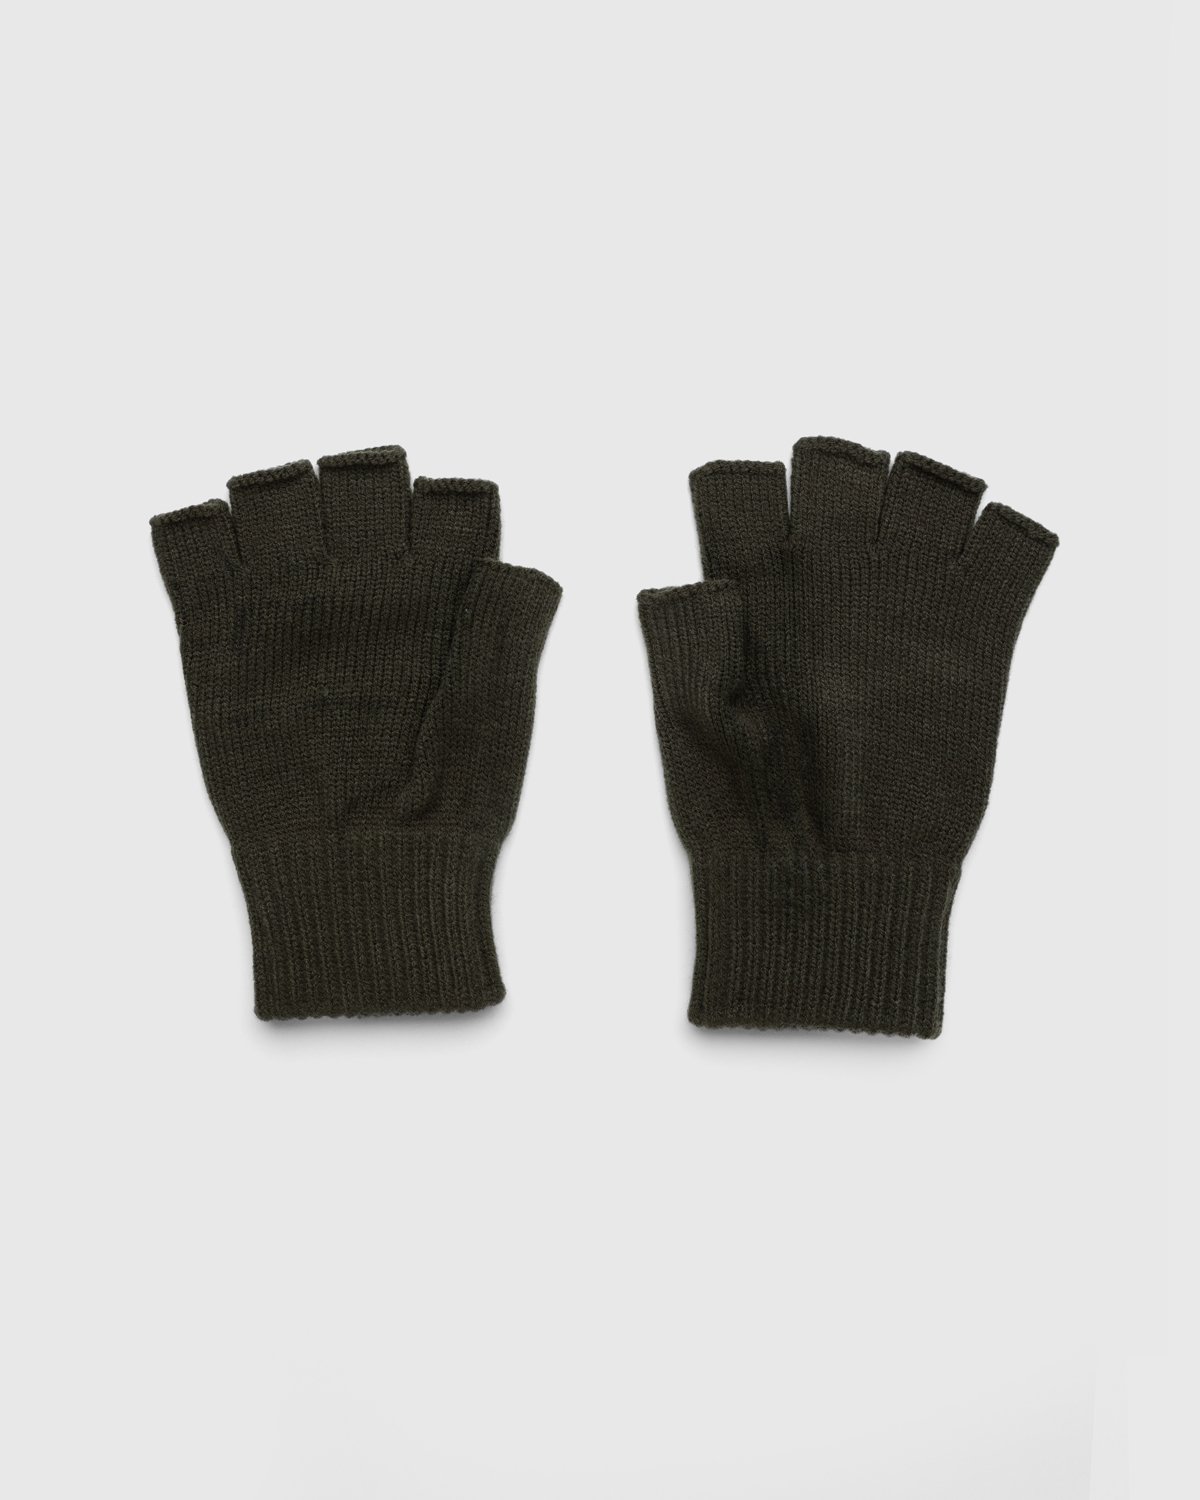 Carhartt WIP - Witten Gloves Khaki - Accessories - Green - Image 2